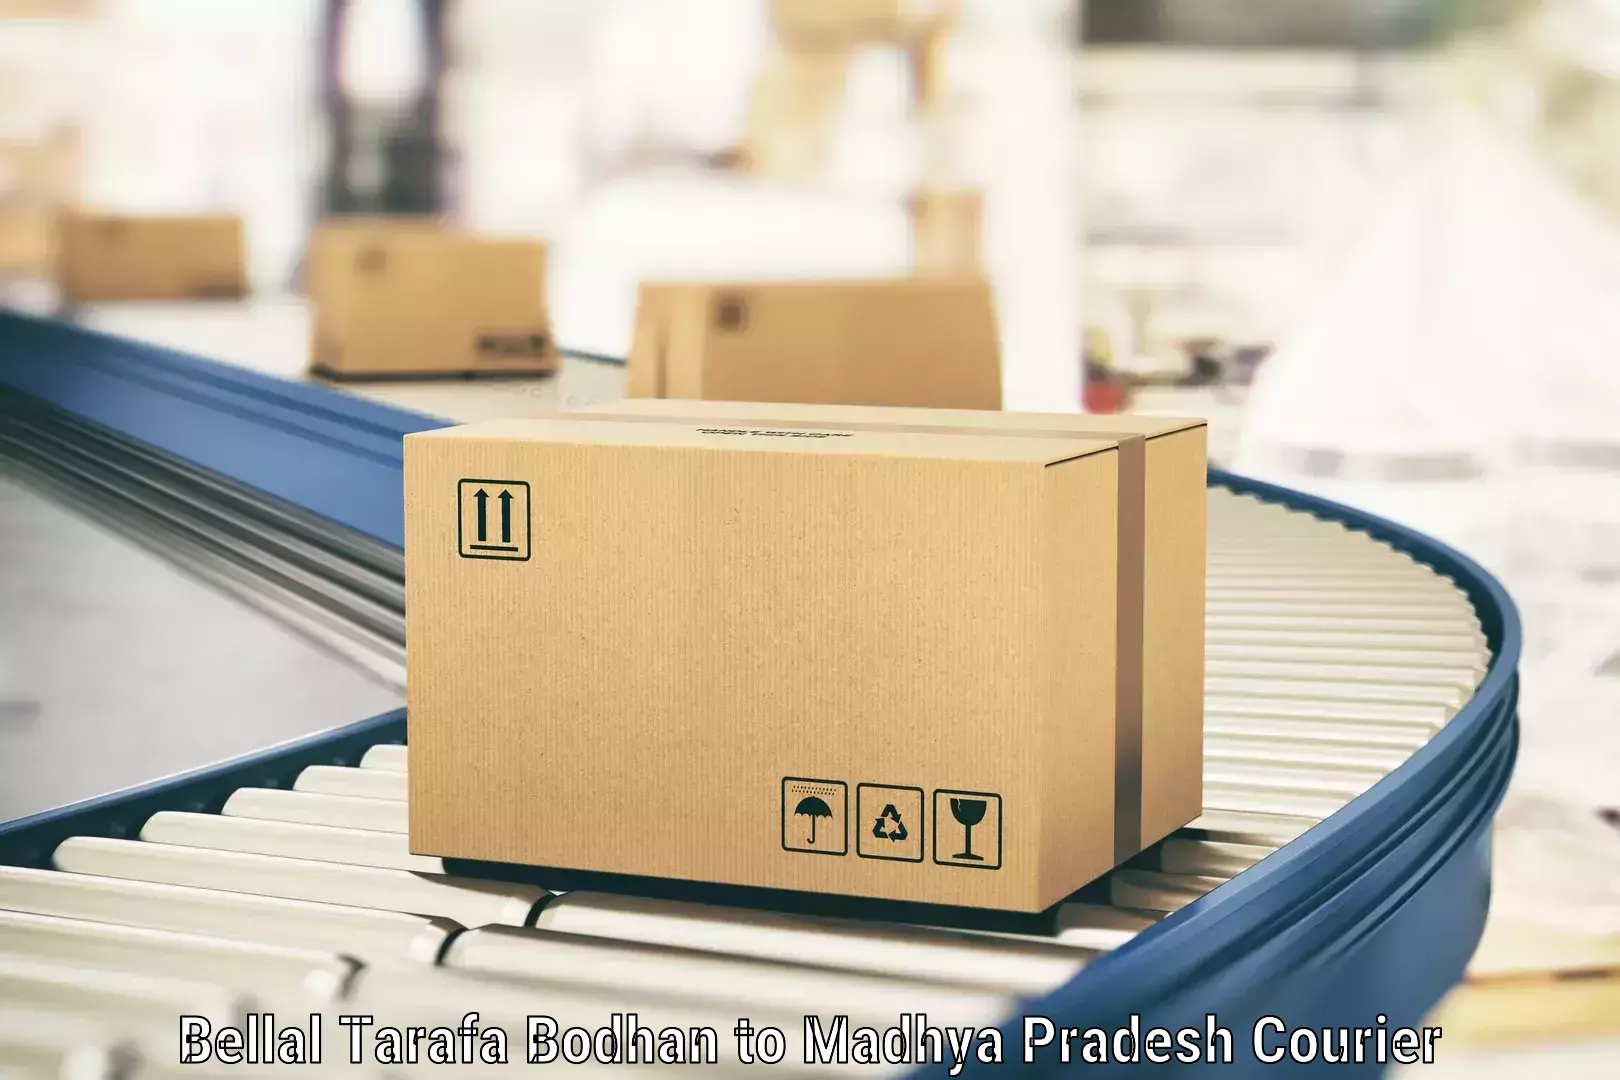 Efficient parcel service Bellal Tarafa Bodhan to Raipur Karchuliyan